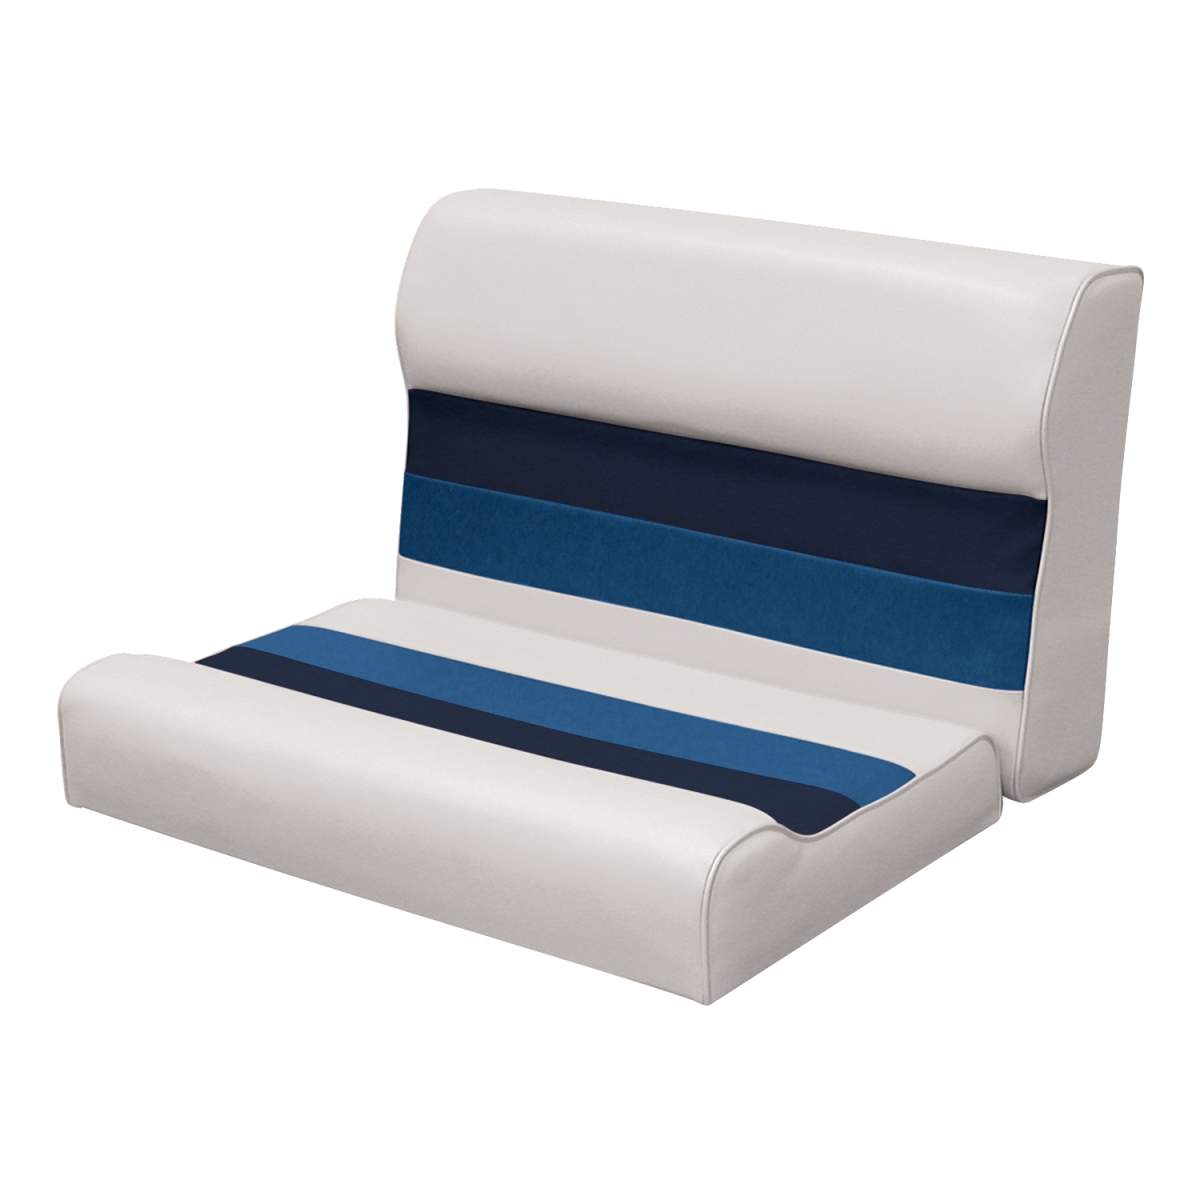 3001.7287 27 In. White, Navy & Blue Bench Seat